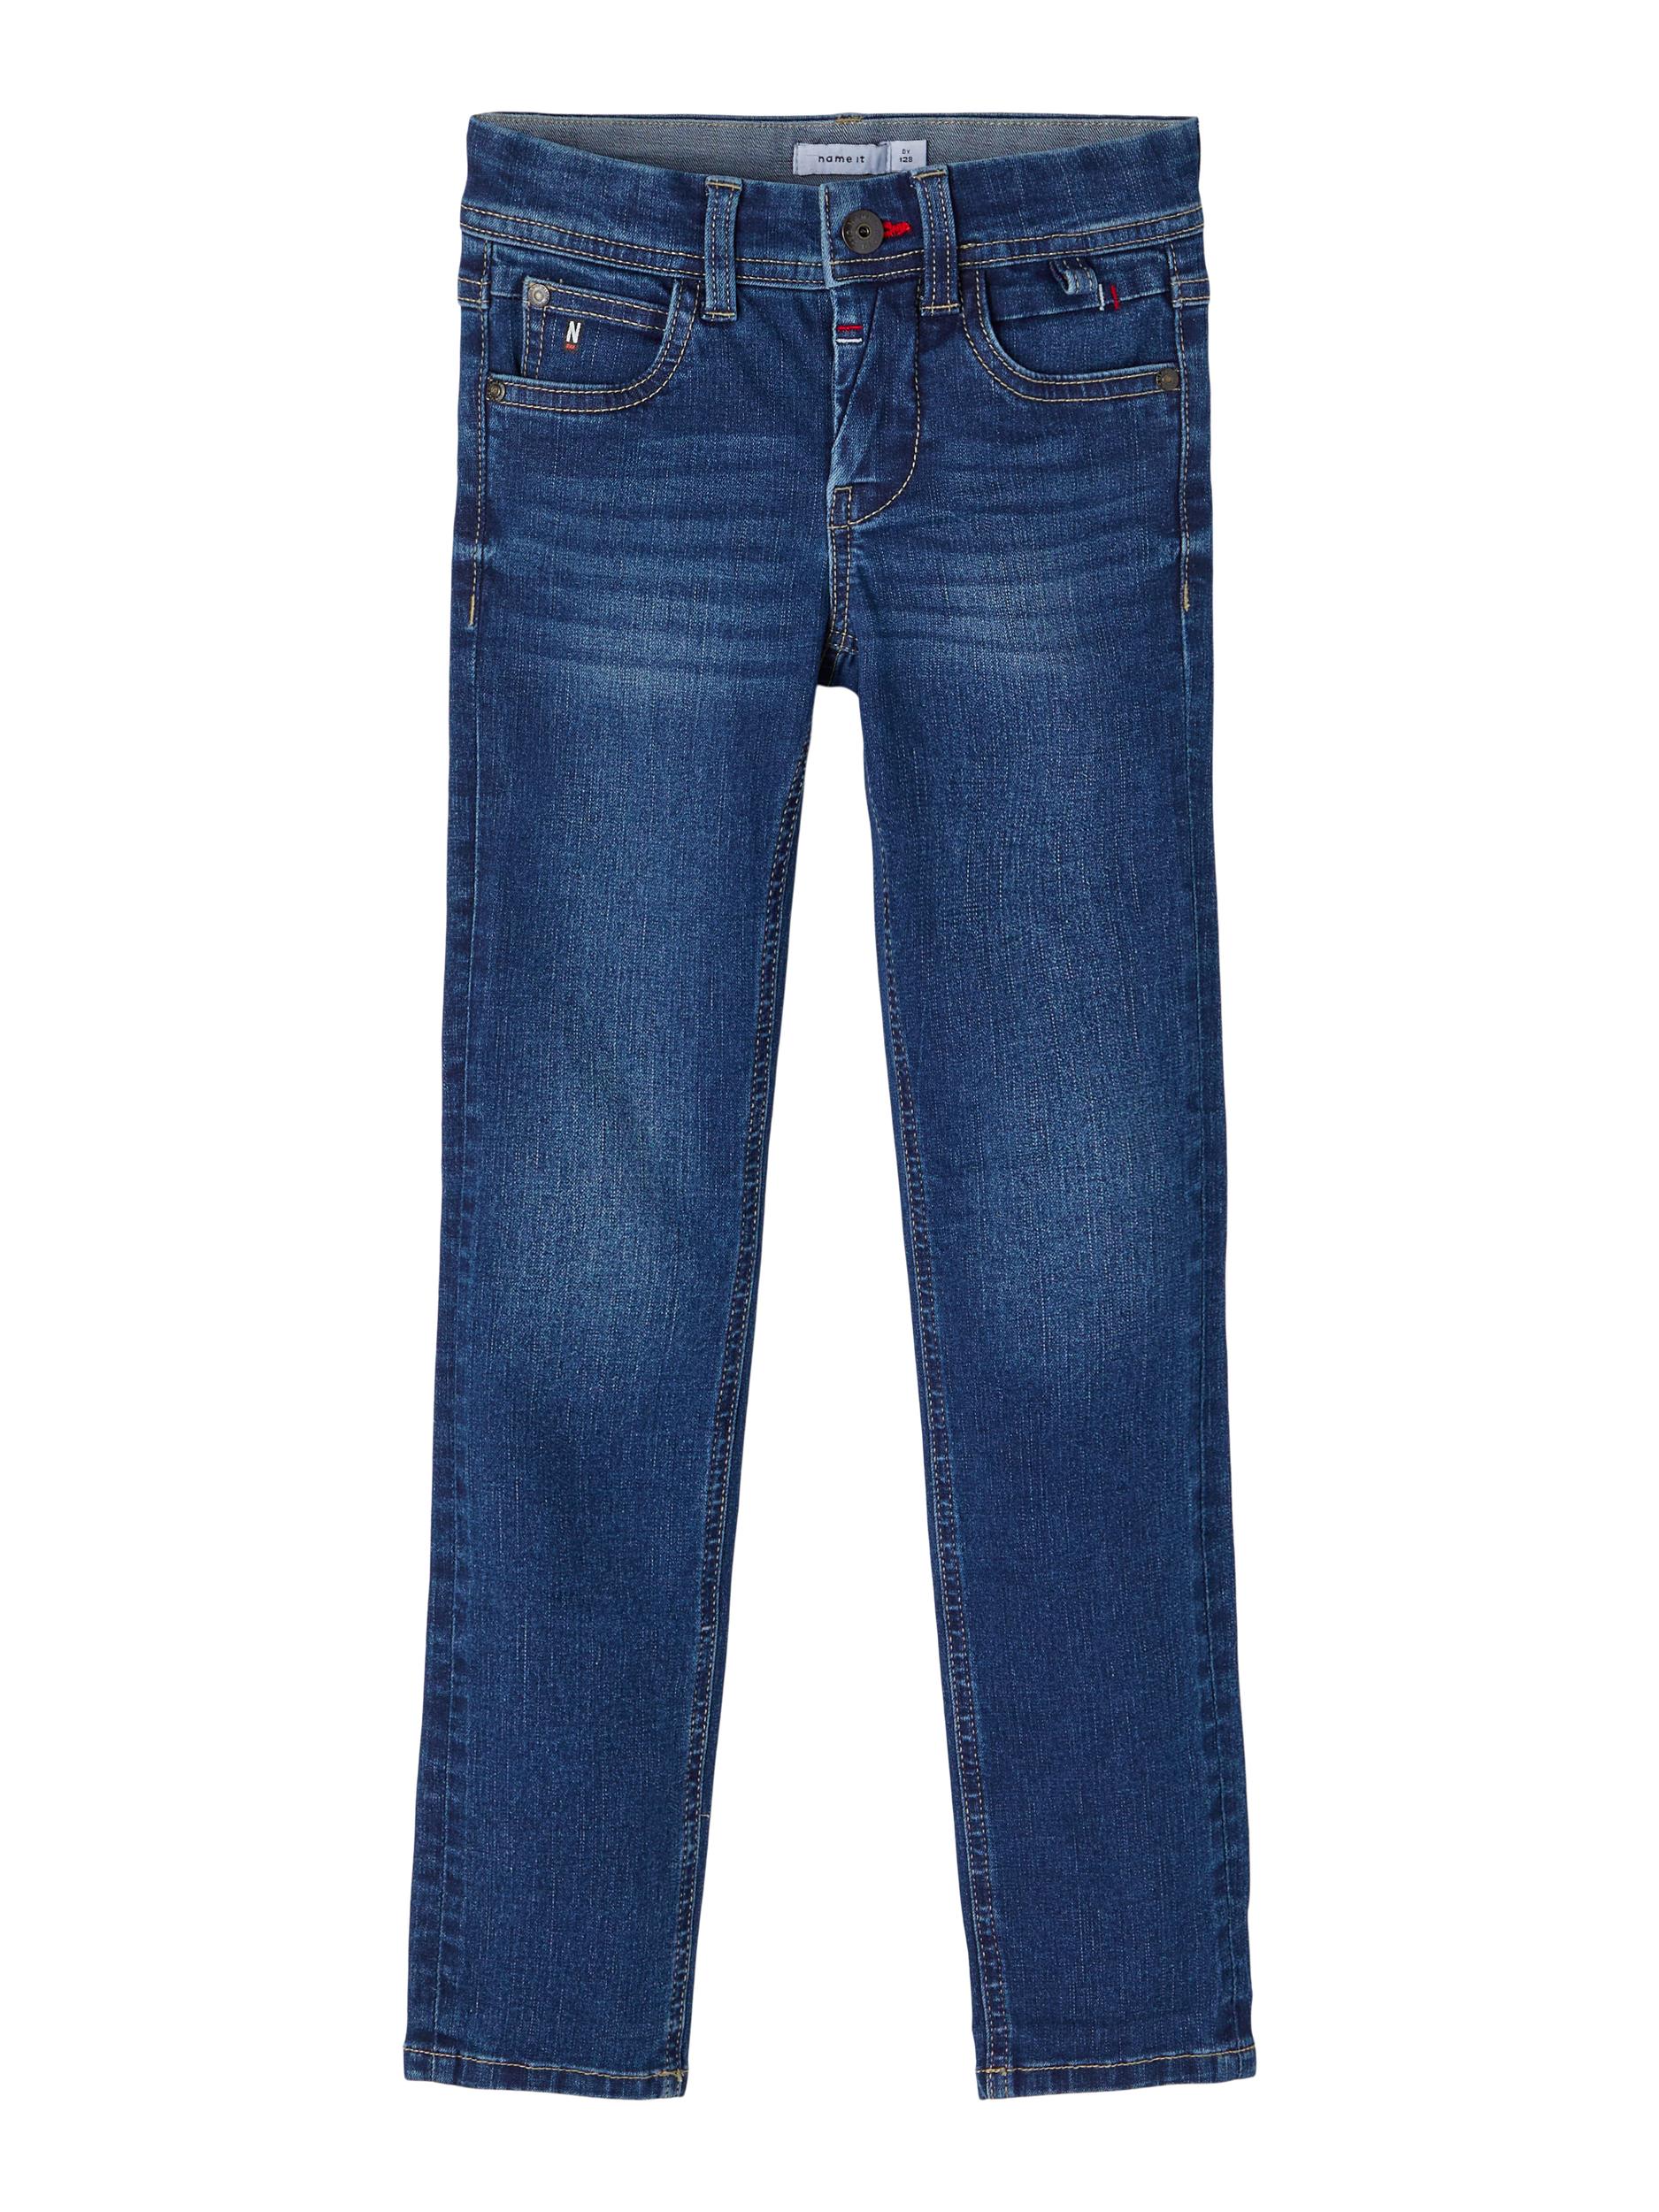  Theo Jeans, Dark Blue Denim, 140 cm